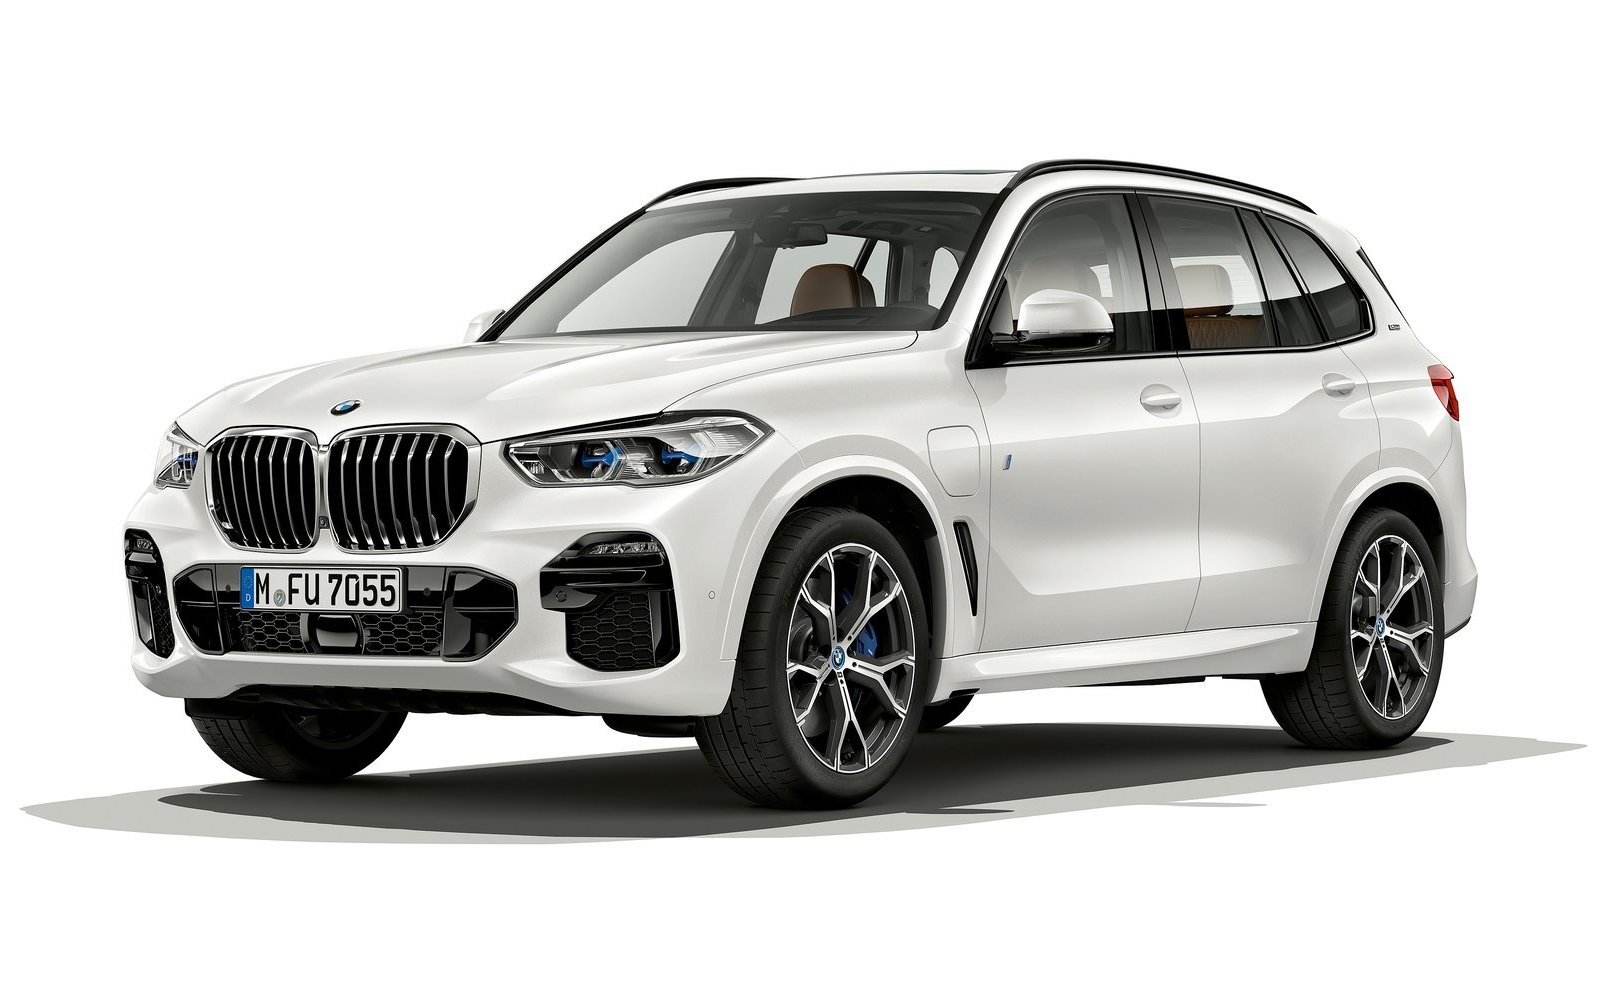 2019 BMW X5 25d, 45e, M50i join Australian lineup